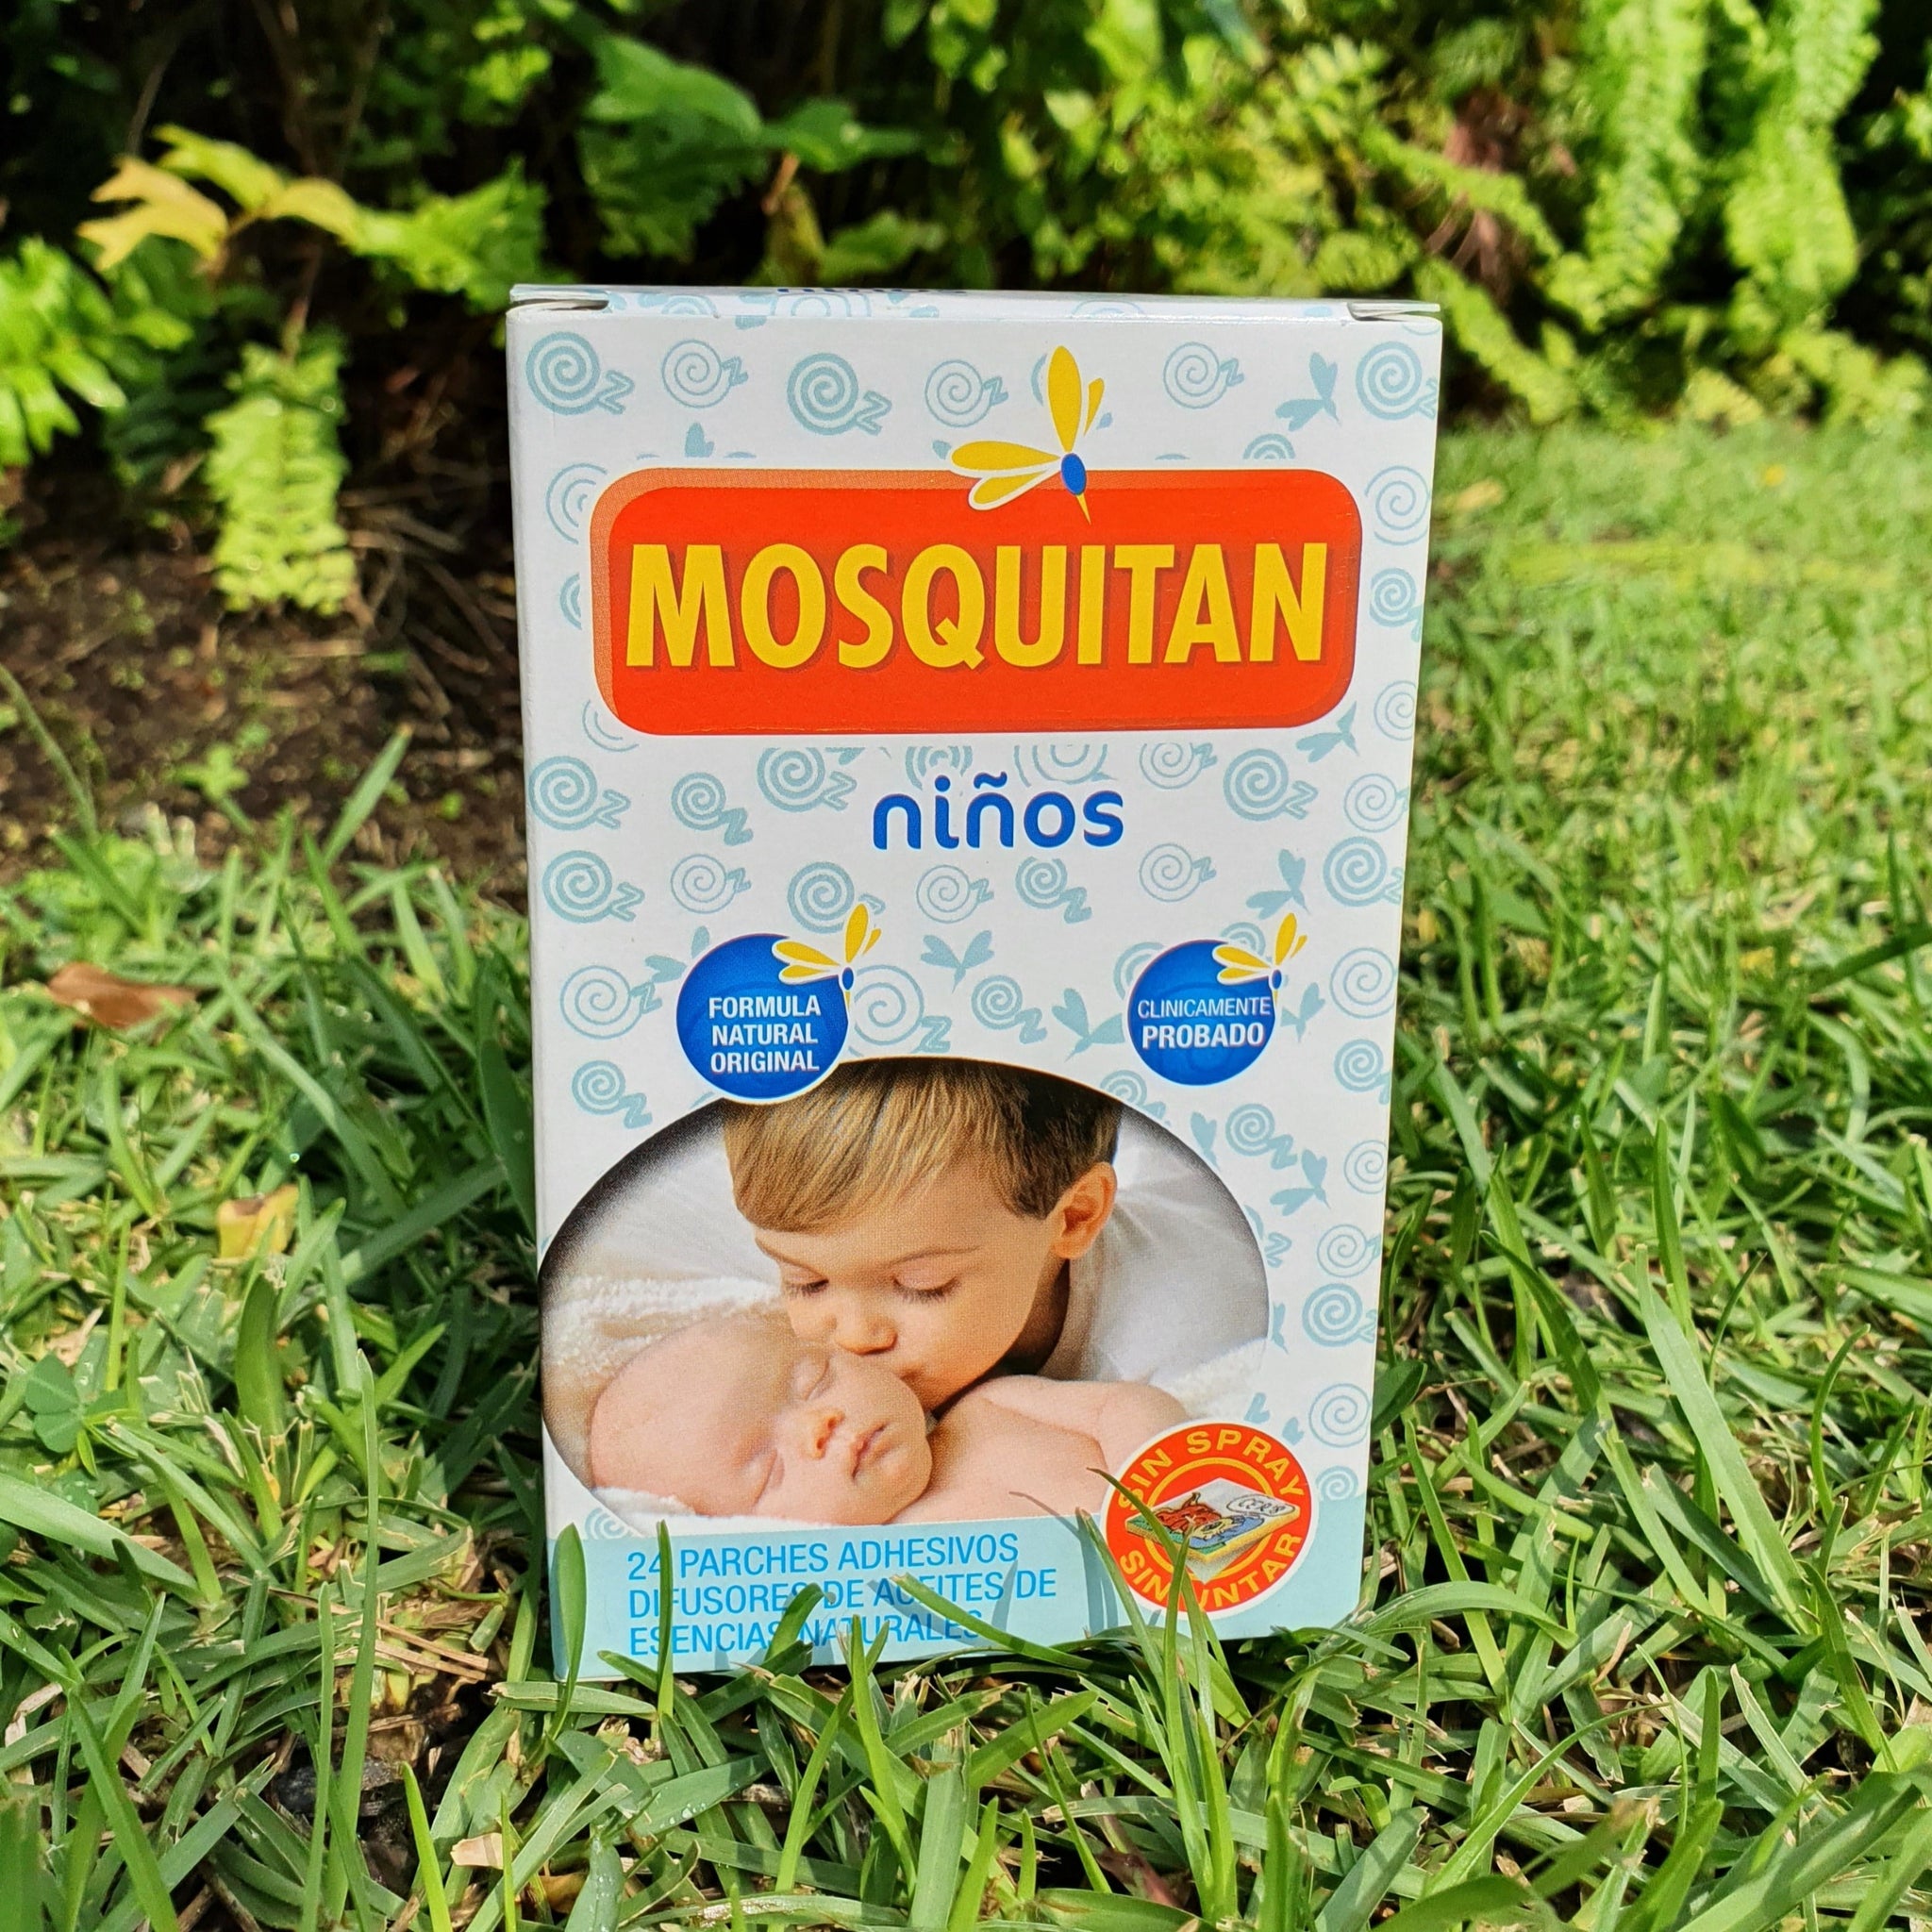 Parches difusores de repelente natural contra mosquitos para bebés